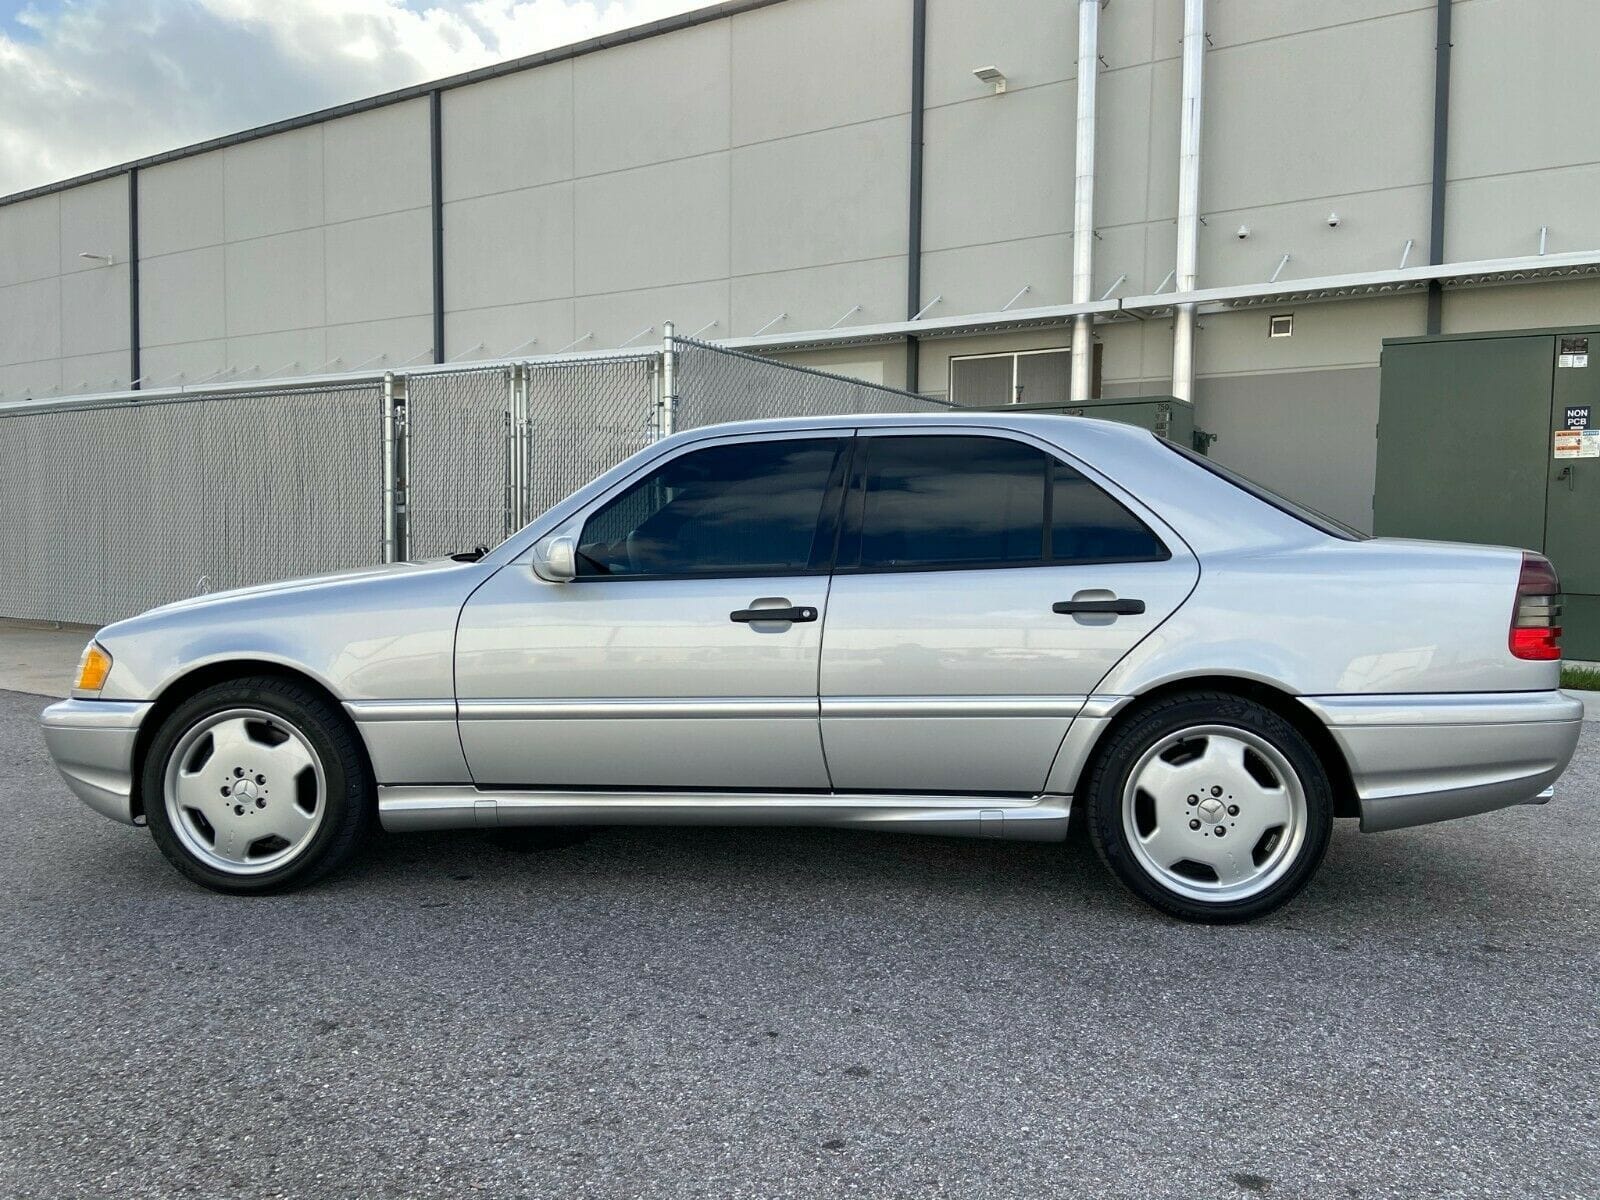 1999 Mercedes-Benz C43 AMG - 1999 Mercedes C43 AMG - Used - VIN WDBHA33E7XF787124 - 94,134 Miles - 8 cyl - 2WD - Automatic - Sedan - Silver - Largo, FL 33773, United States